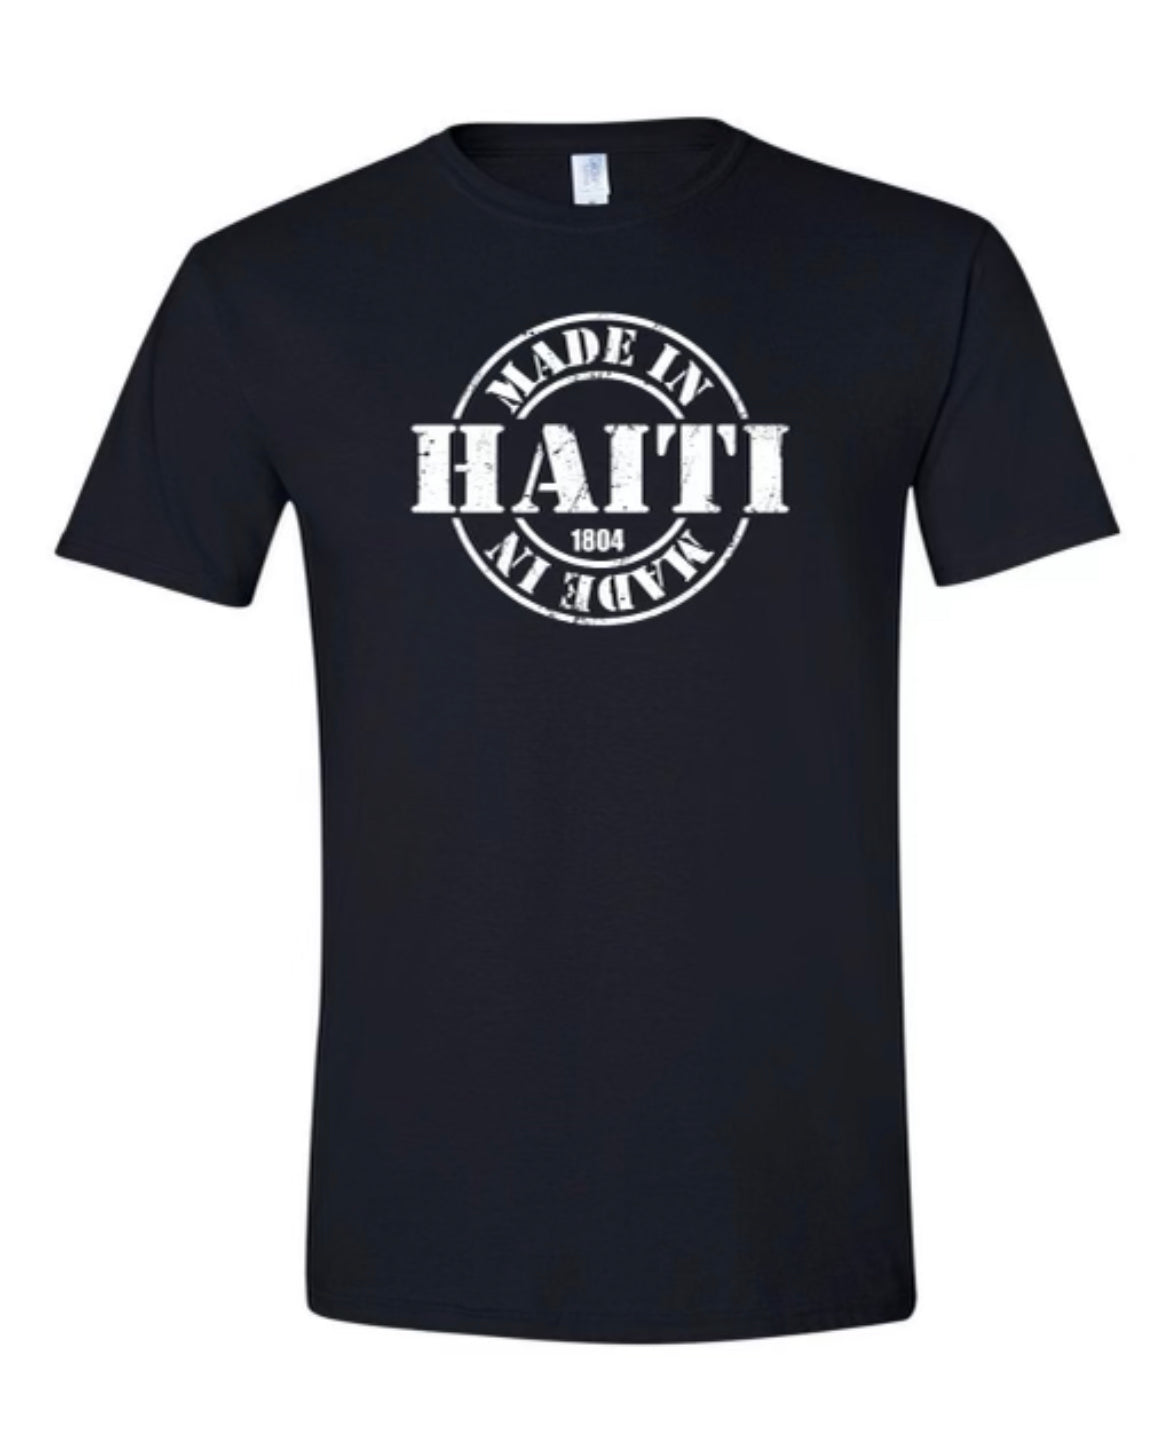 Made in Haiti Puff Black T-shirt